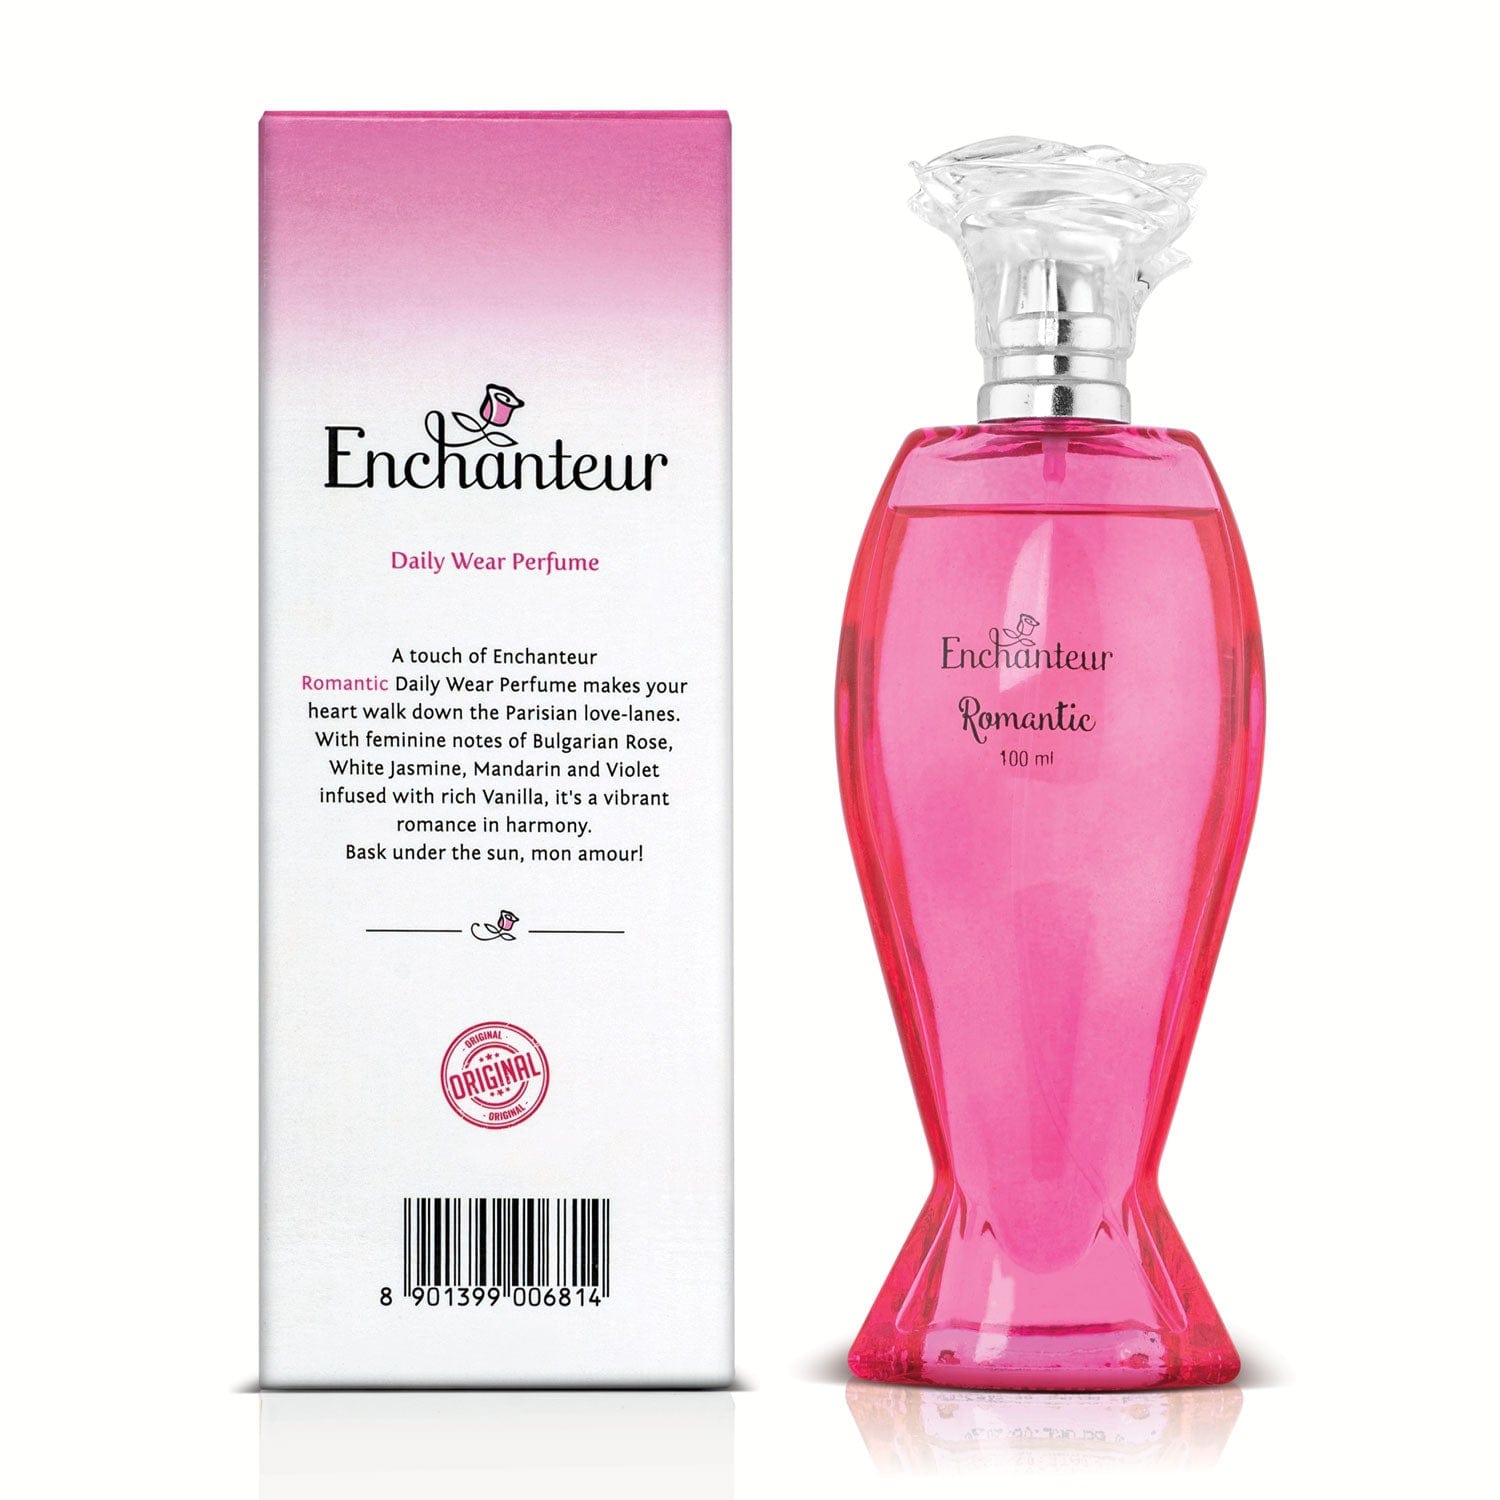 Enchanteur Romantic Daily wear Perfume for Women, 100ml By Enchanteur